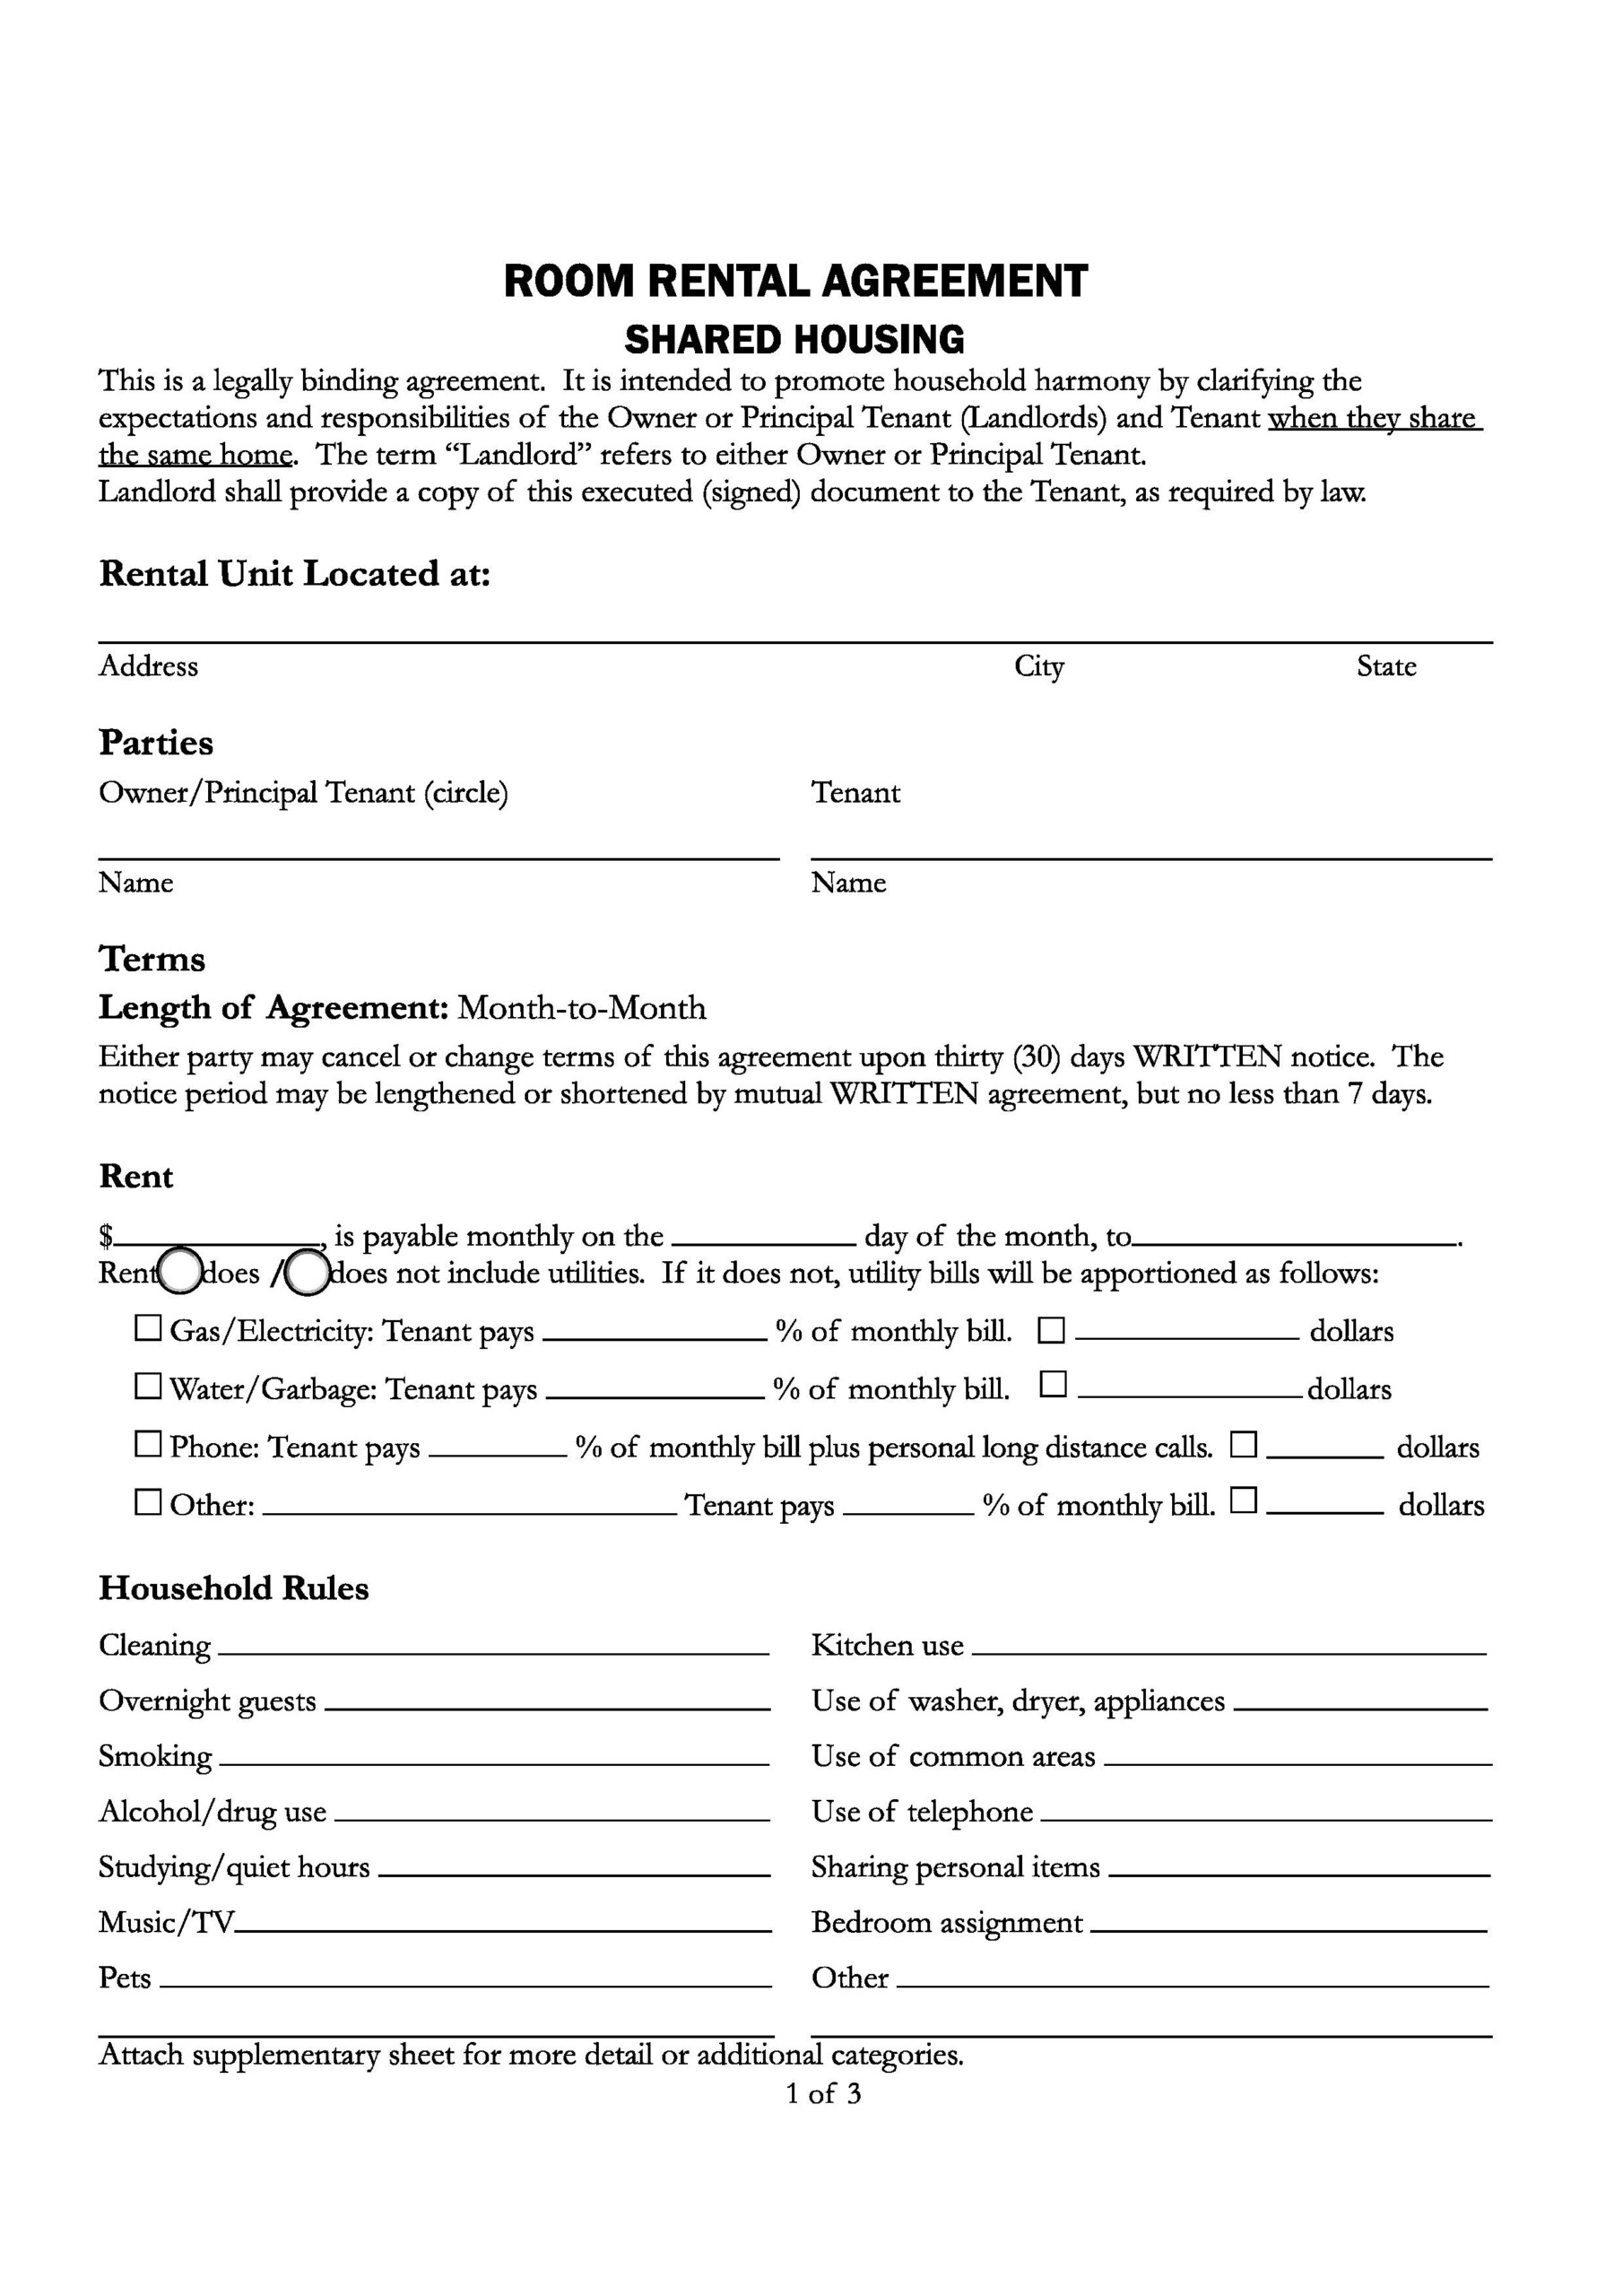 Download Free California Room Rental Agreement Printable Lease